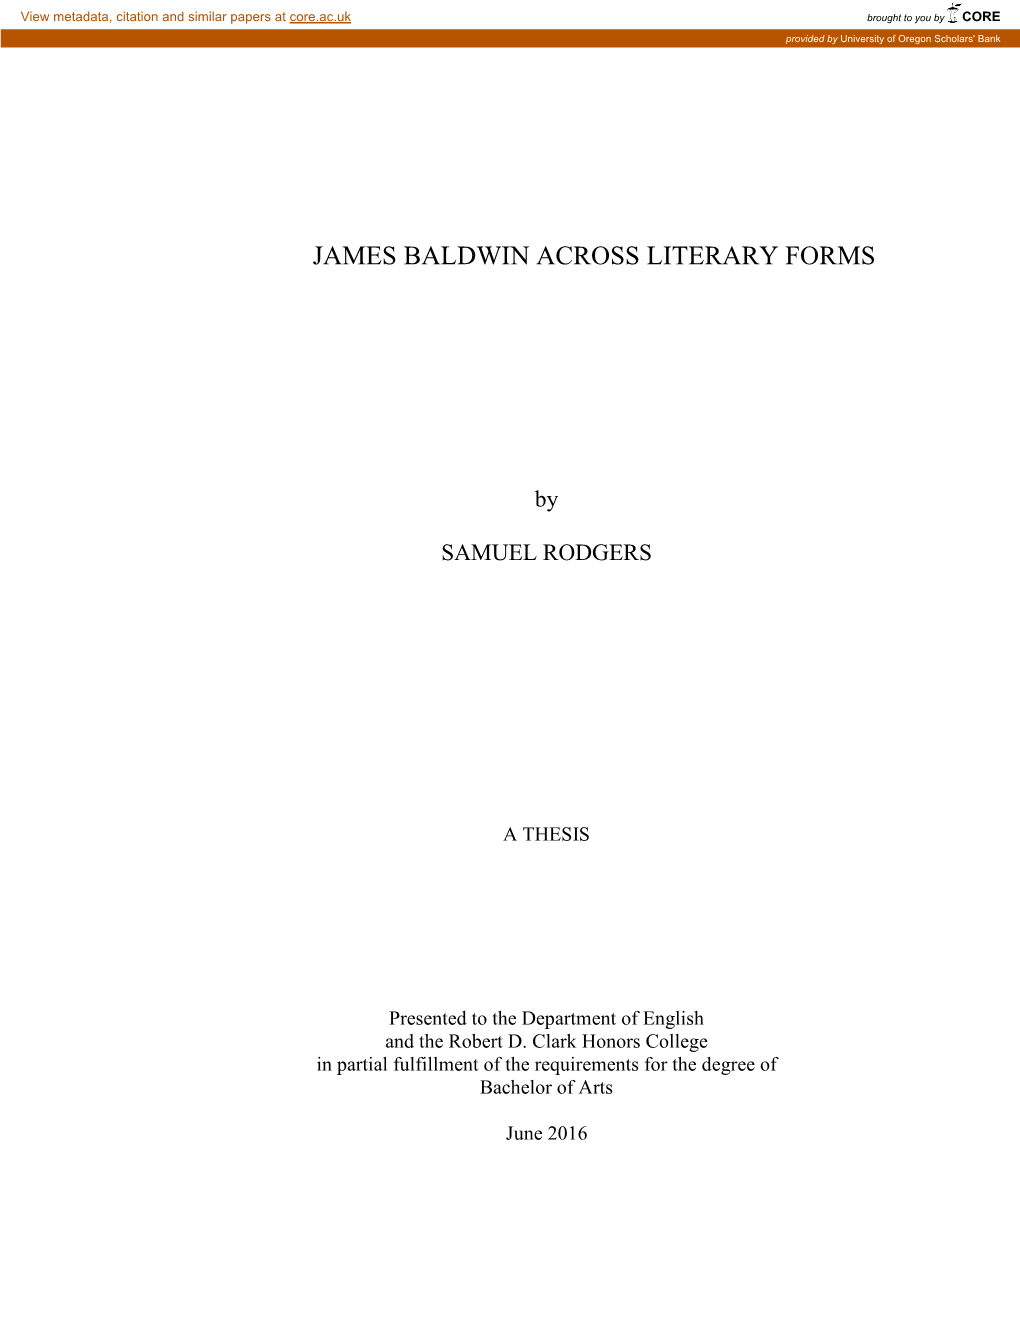 James Baldwin Across Literary Forms